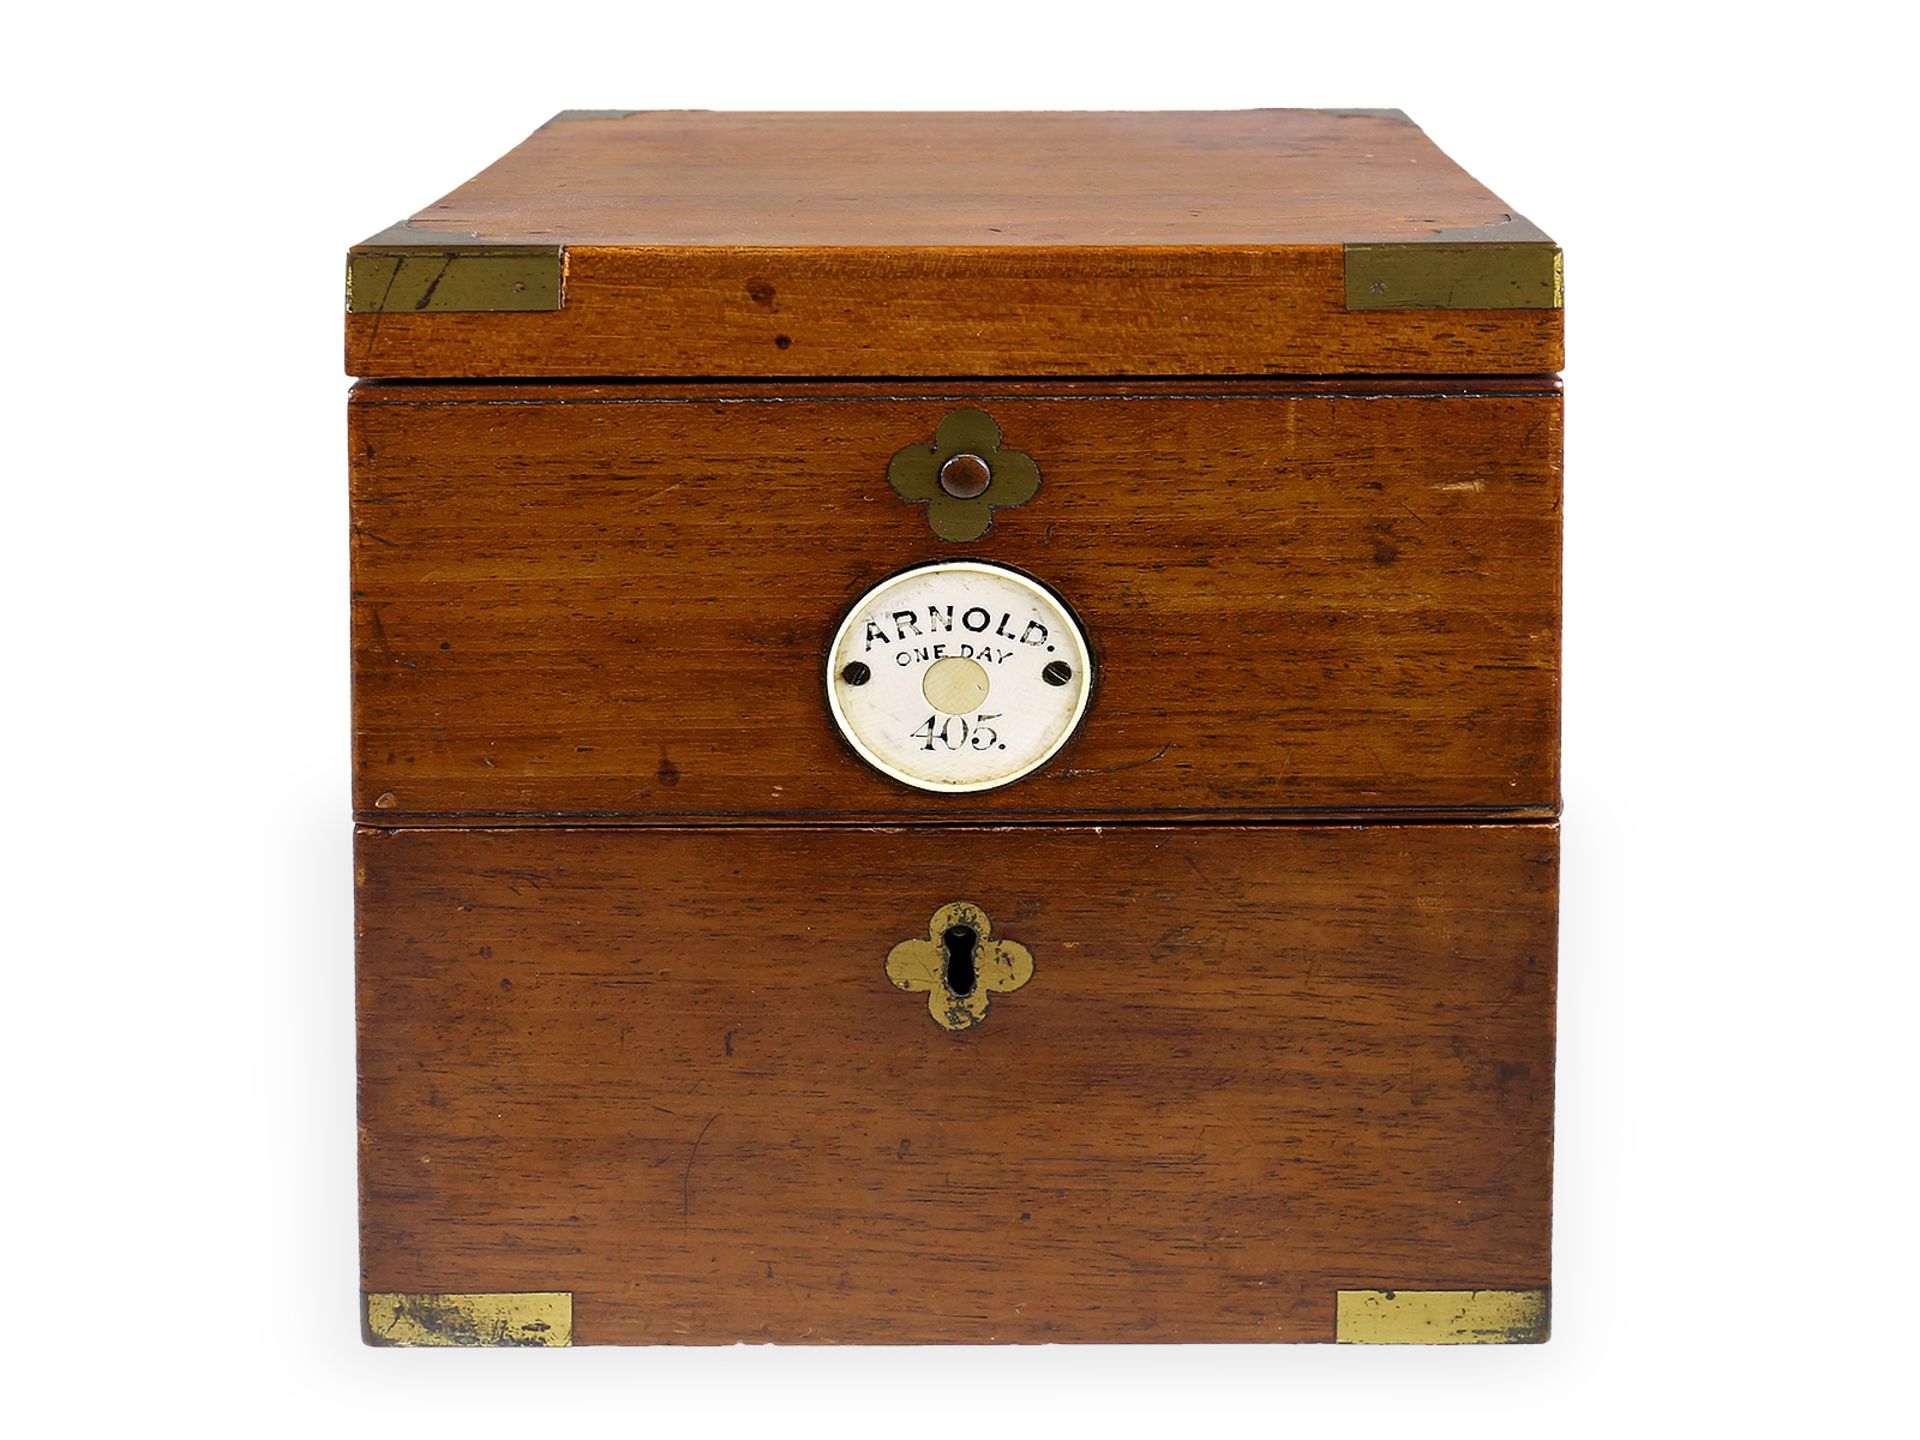 Marinechronometer: extrem seltenes, bedeutendes Chronometer, John Roger Arnold London No.405, 1812 - Bild 7 aus 8